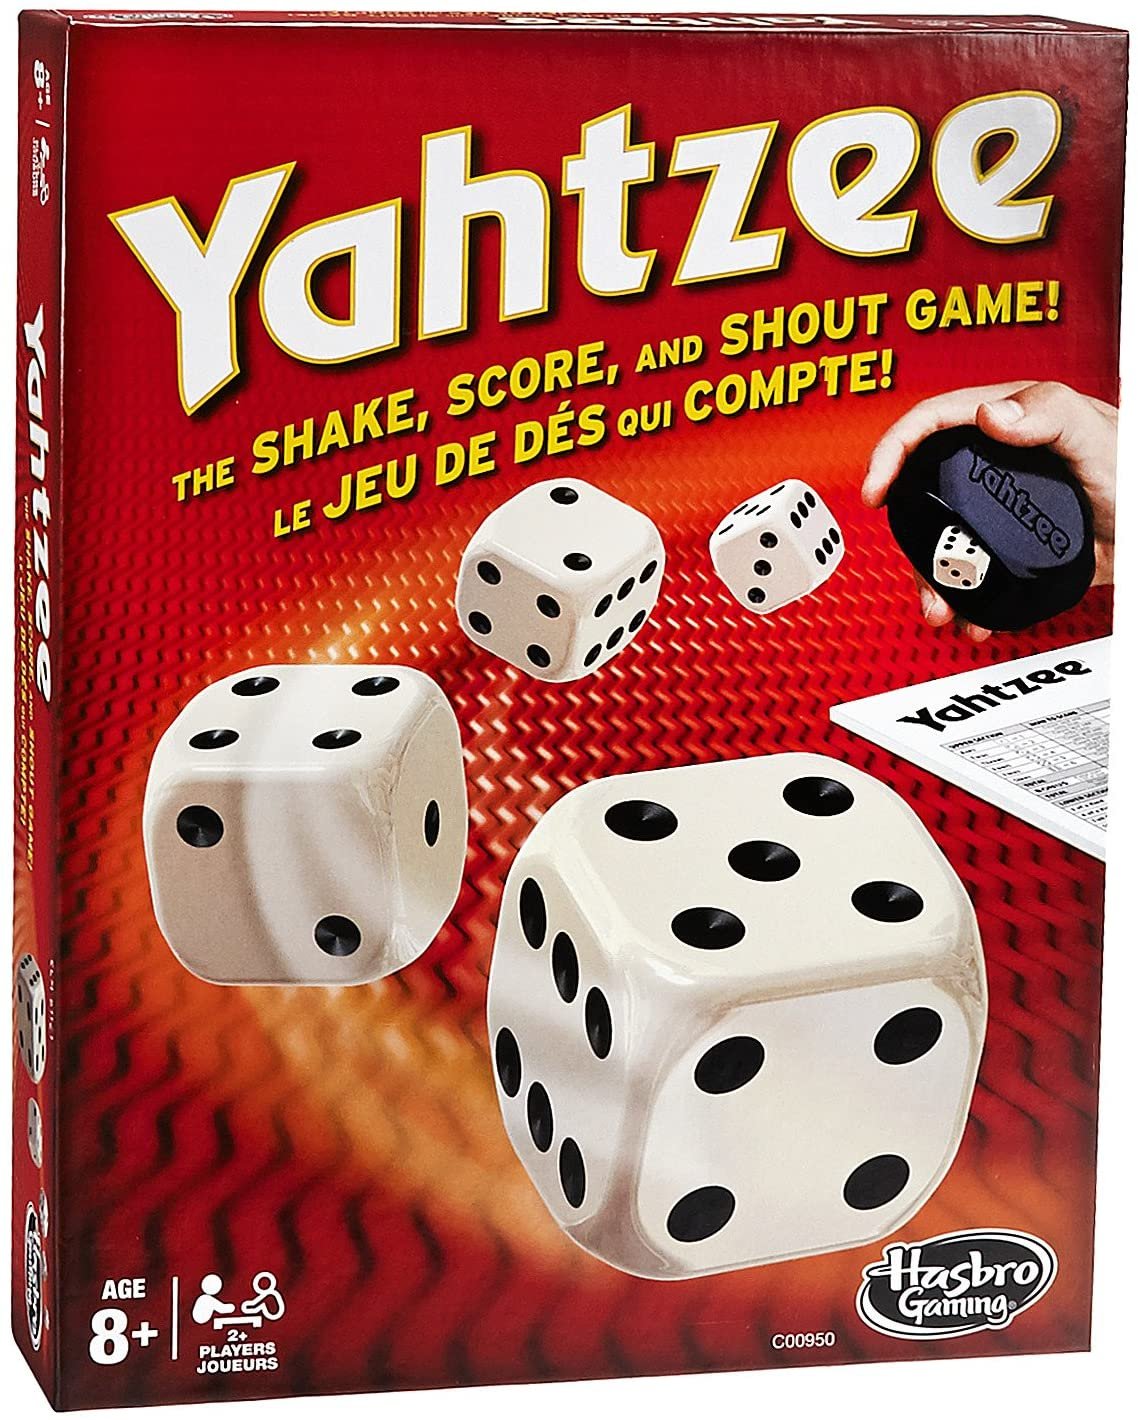 Hasbro Yahtzee - the Shake, Score, and Shout Game - image 2 of 4